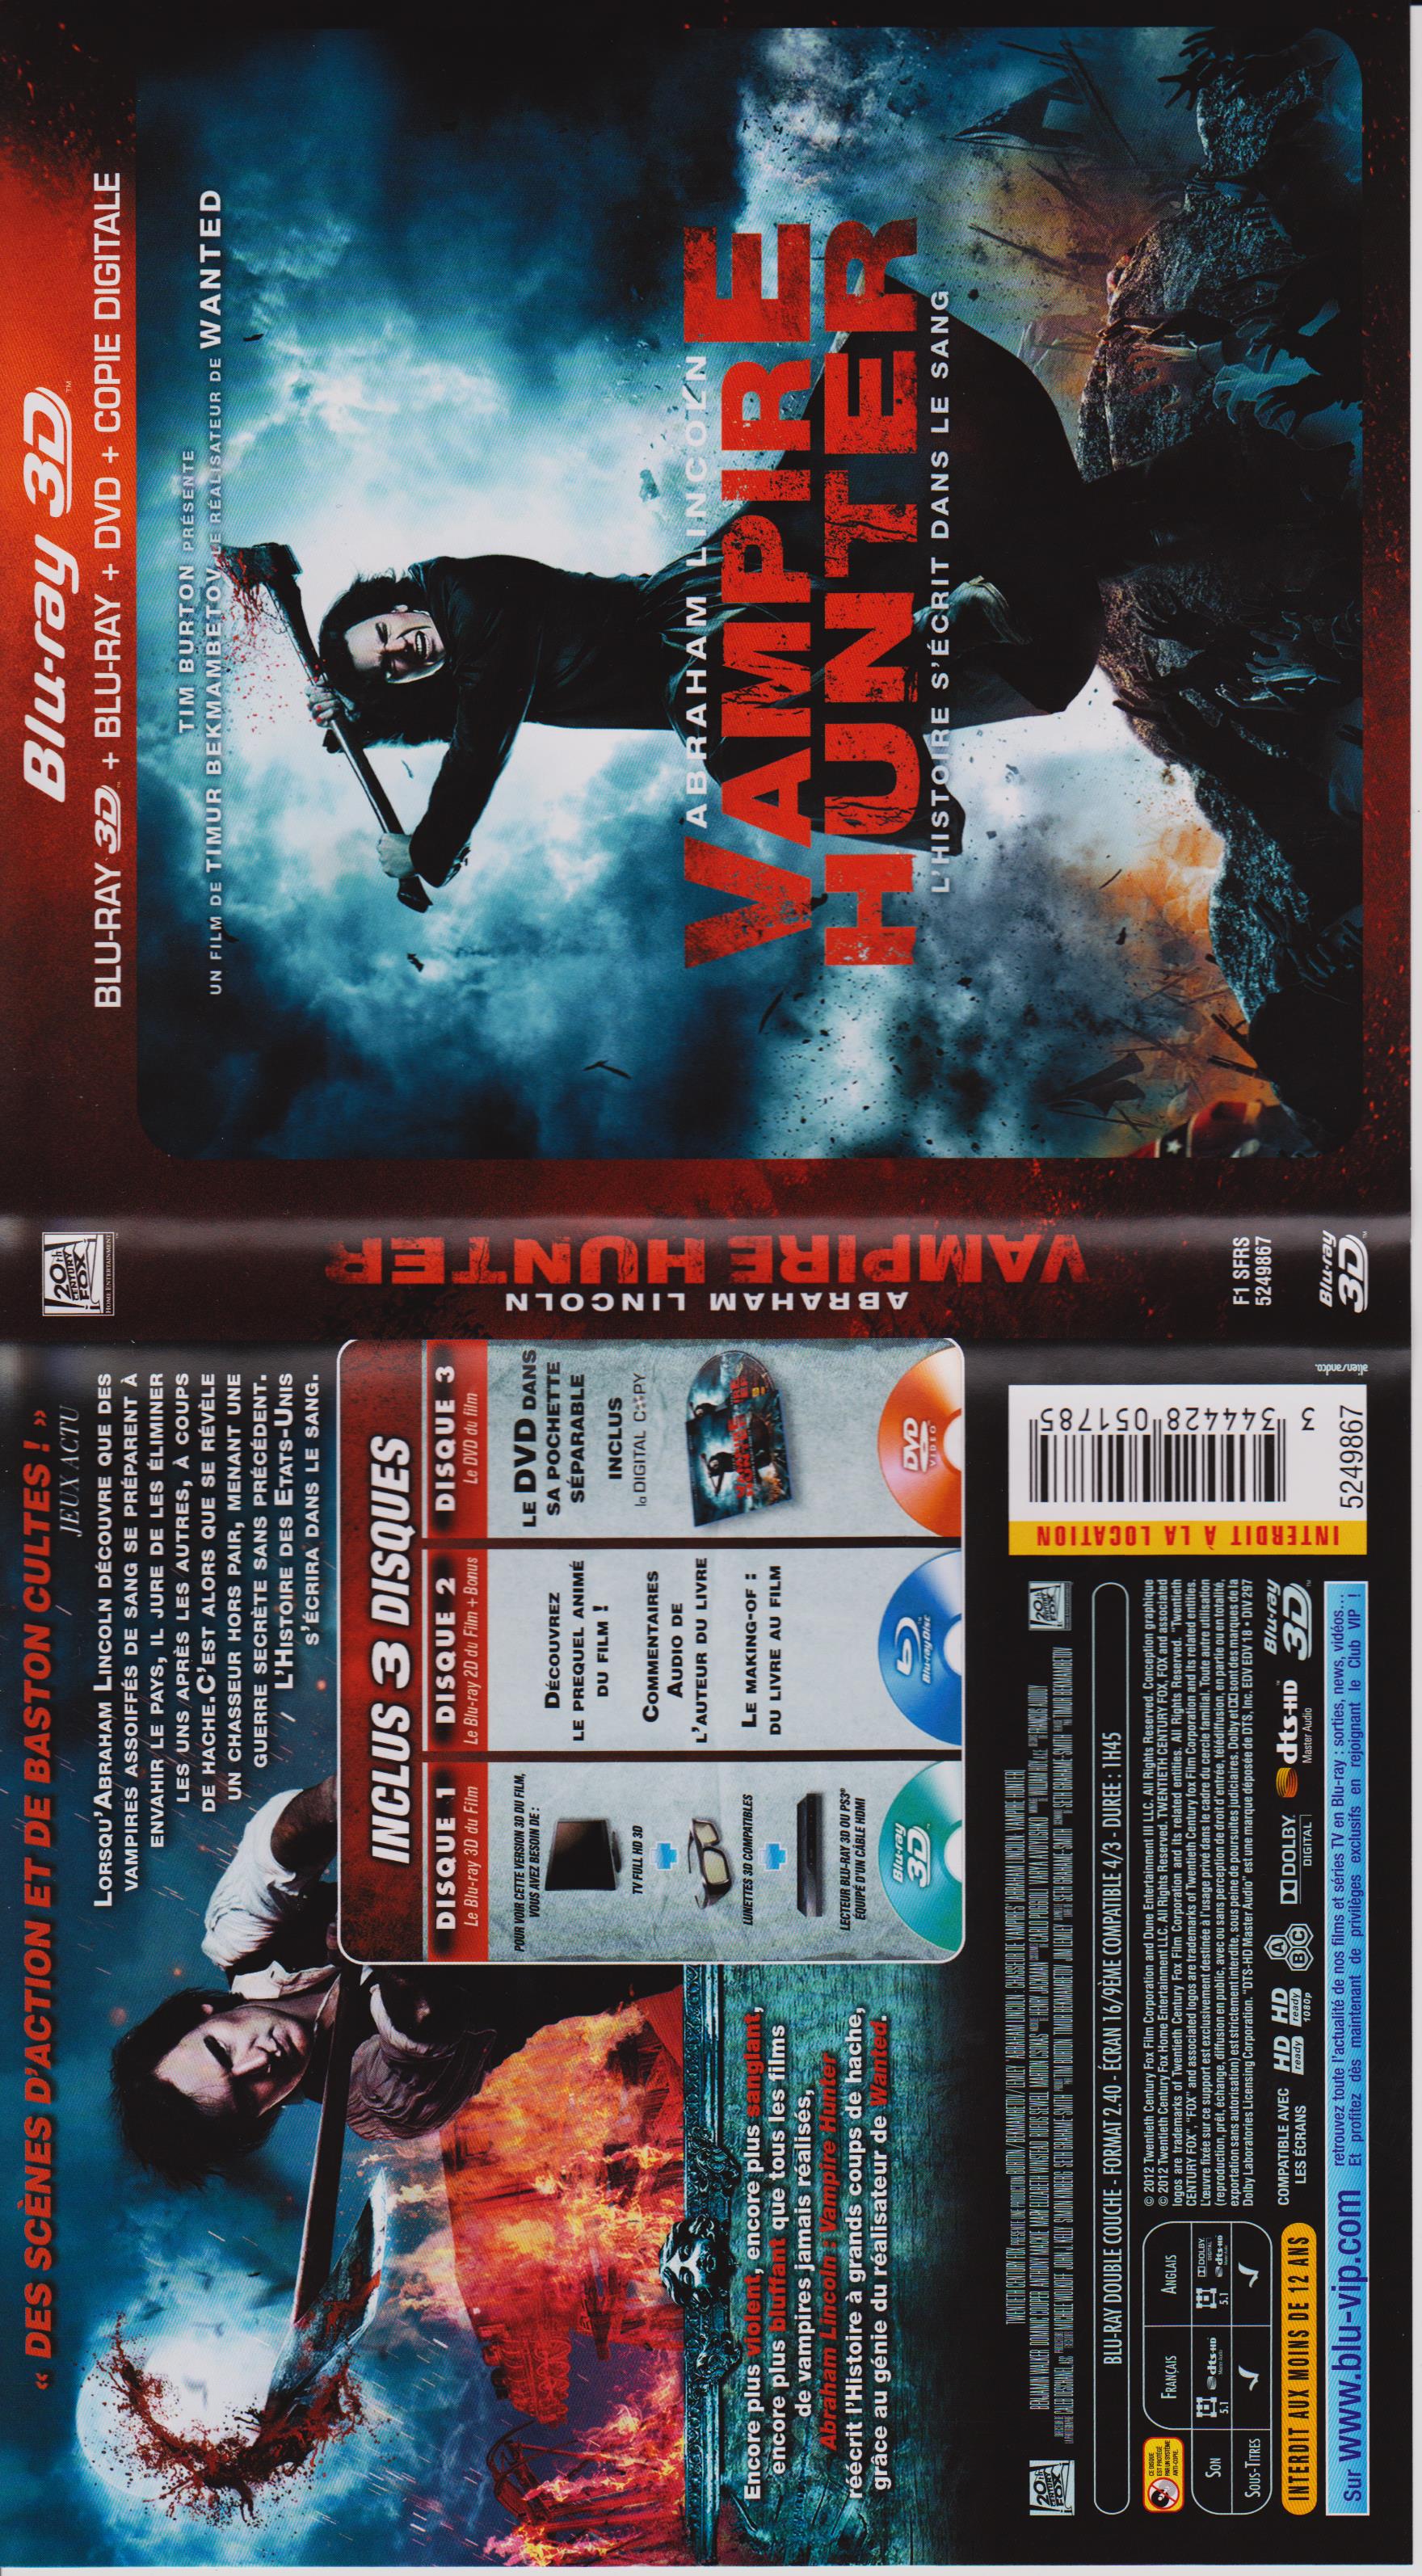 Jaquette DVD Abraham Lincoln Vampire hunter (BLU-RAY)